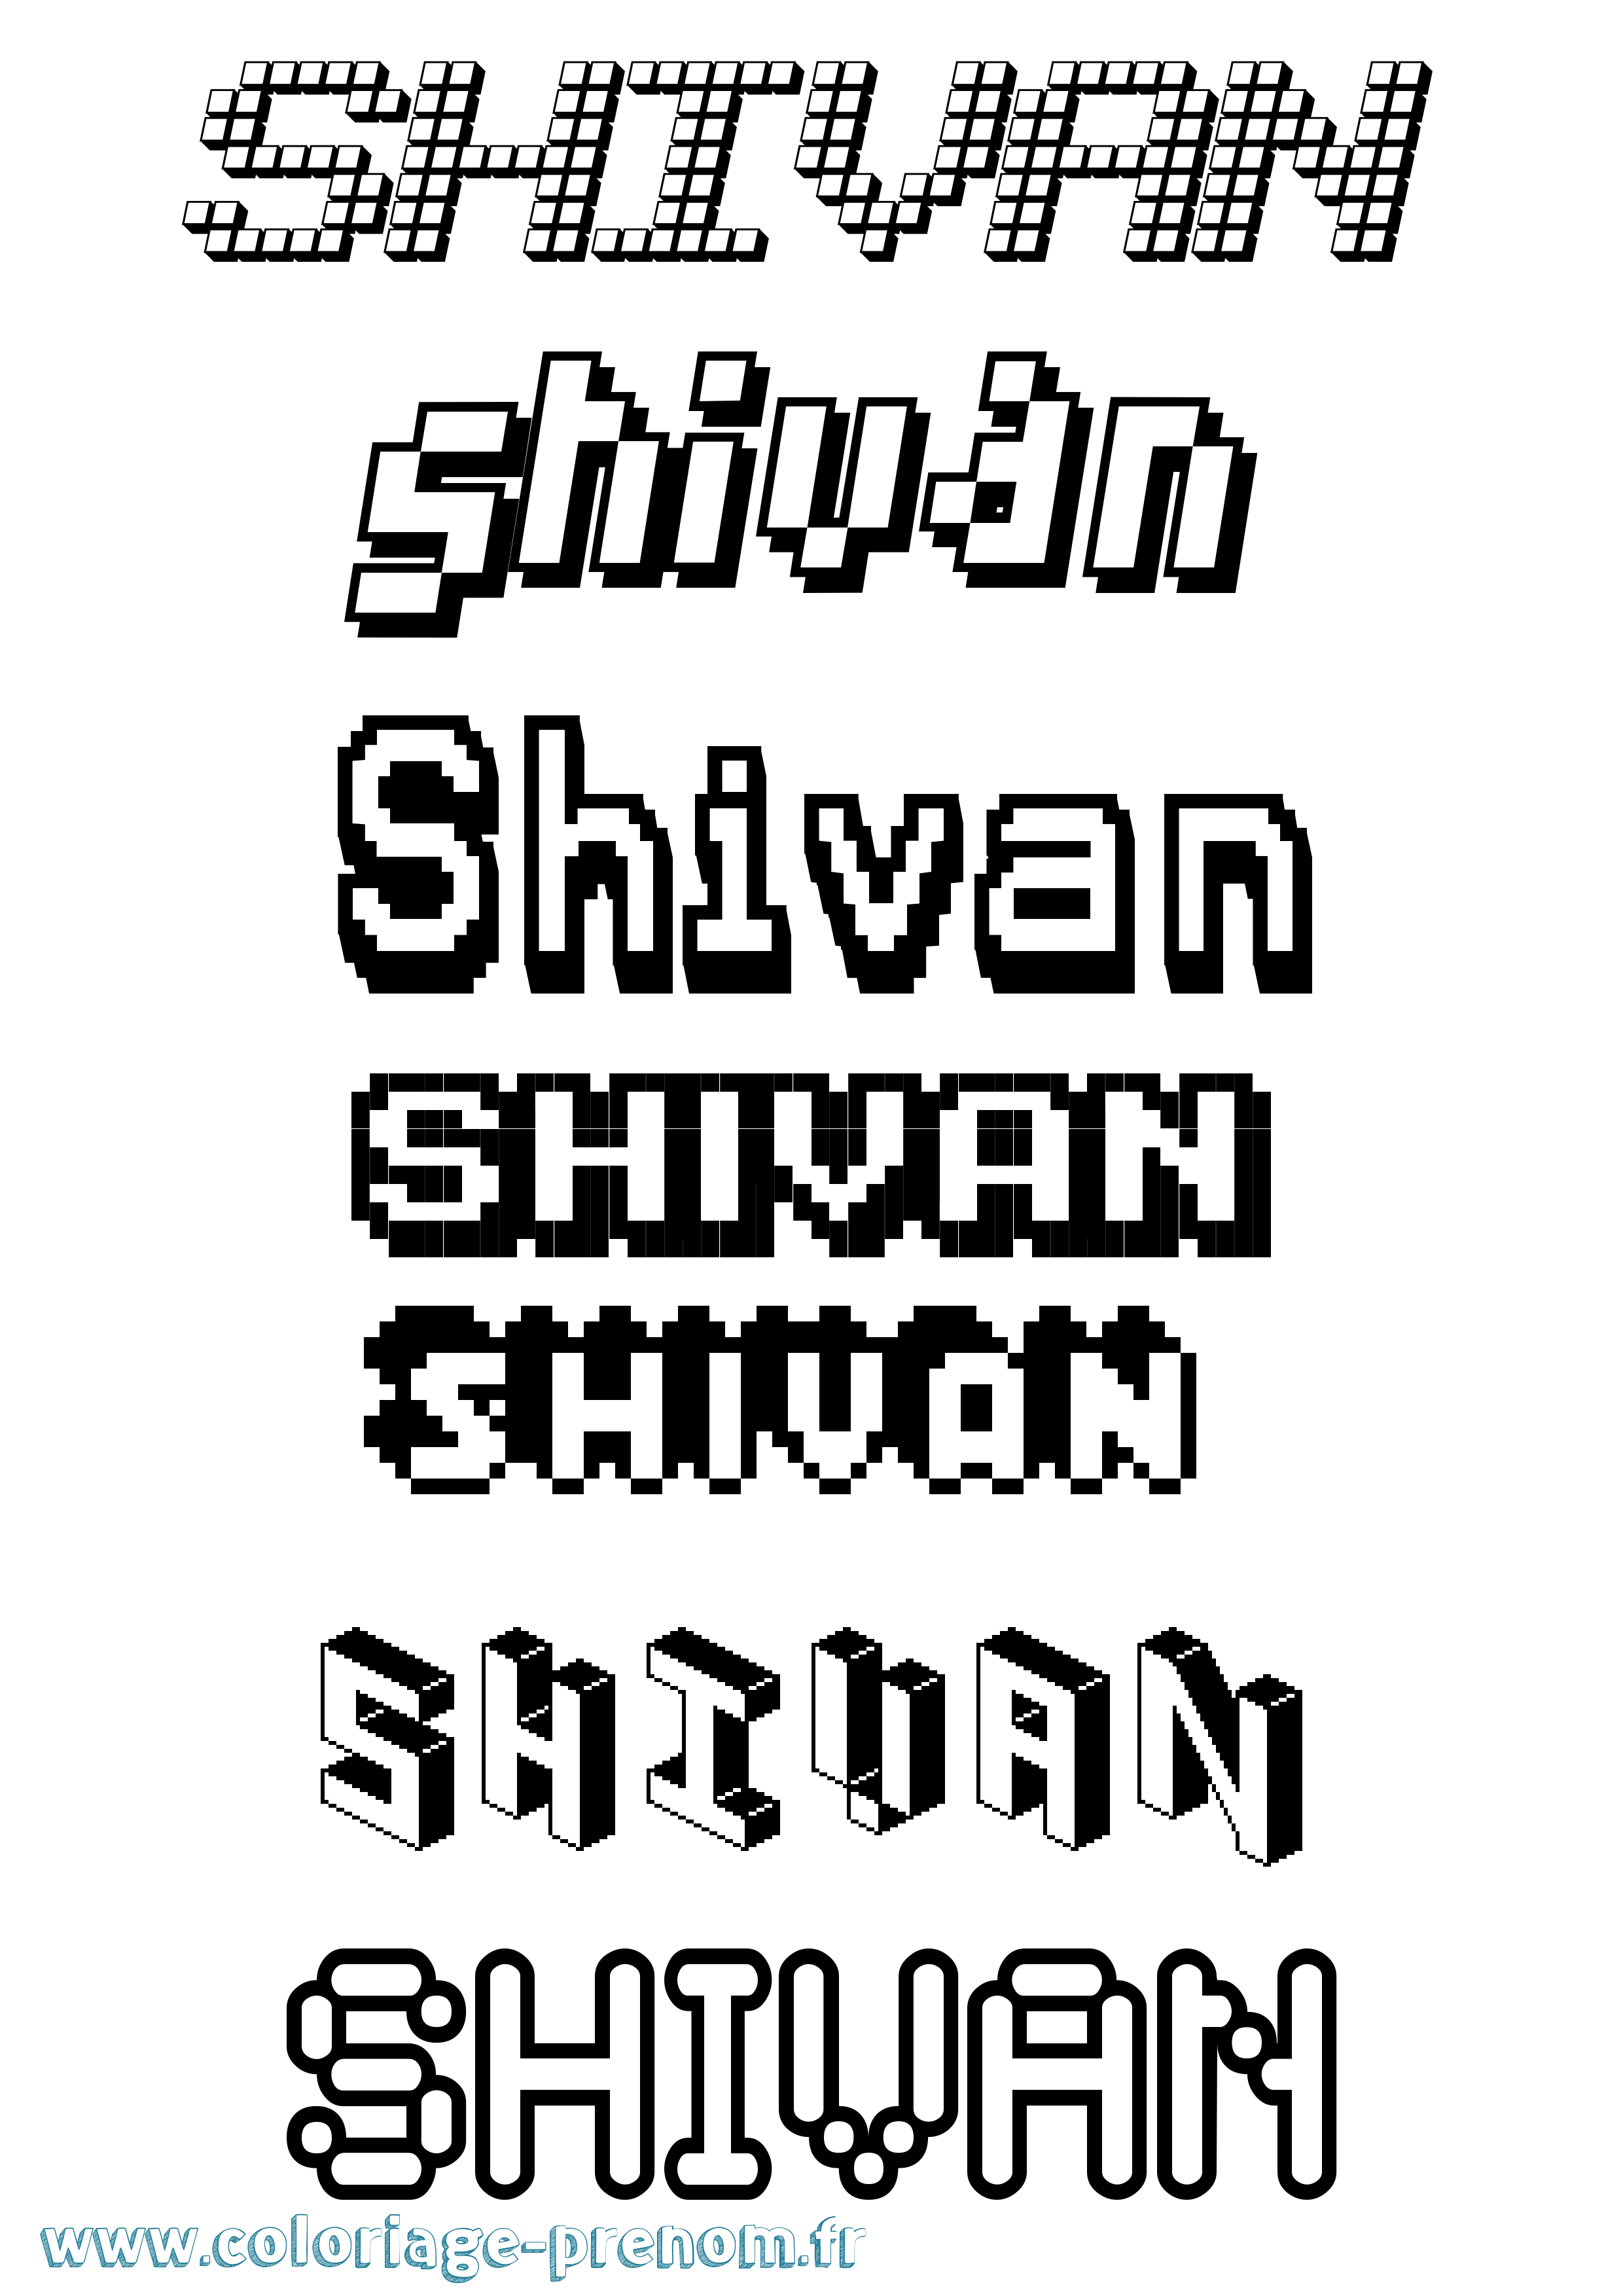 Coloriage prénom Shivan Pixel